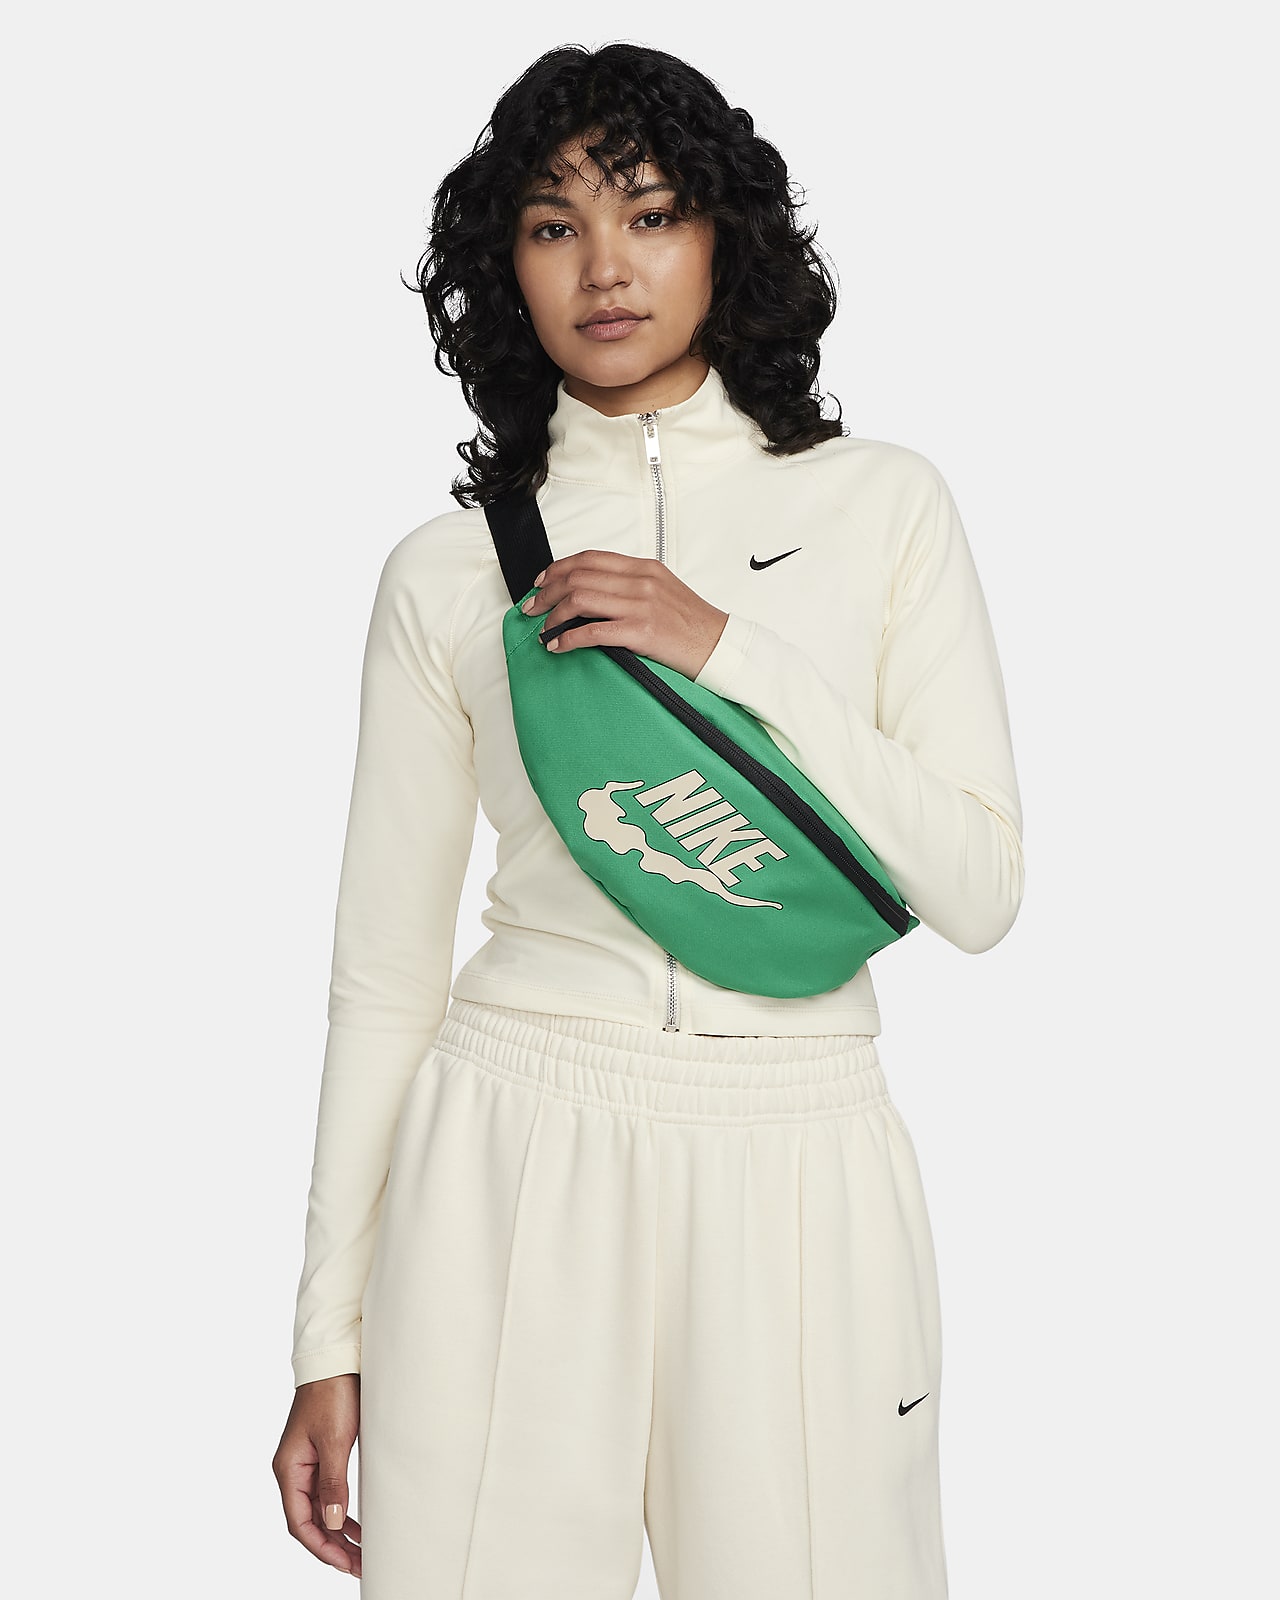 Nike Heritage Gürteltasche (3 l)